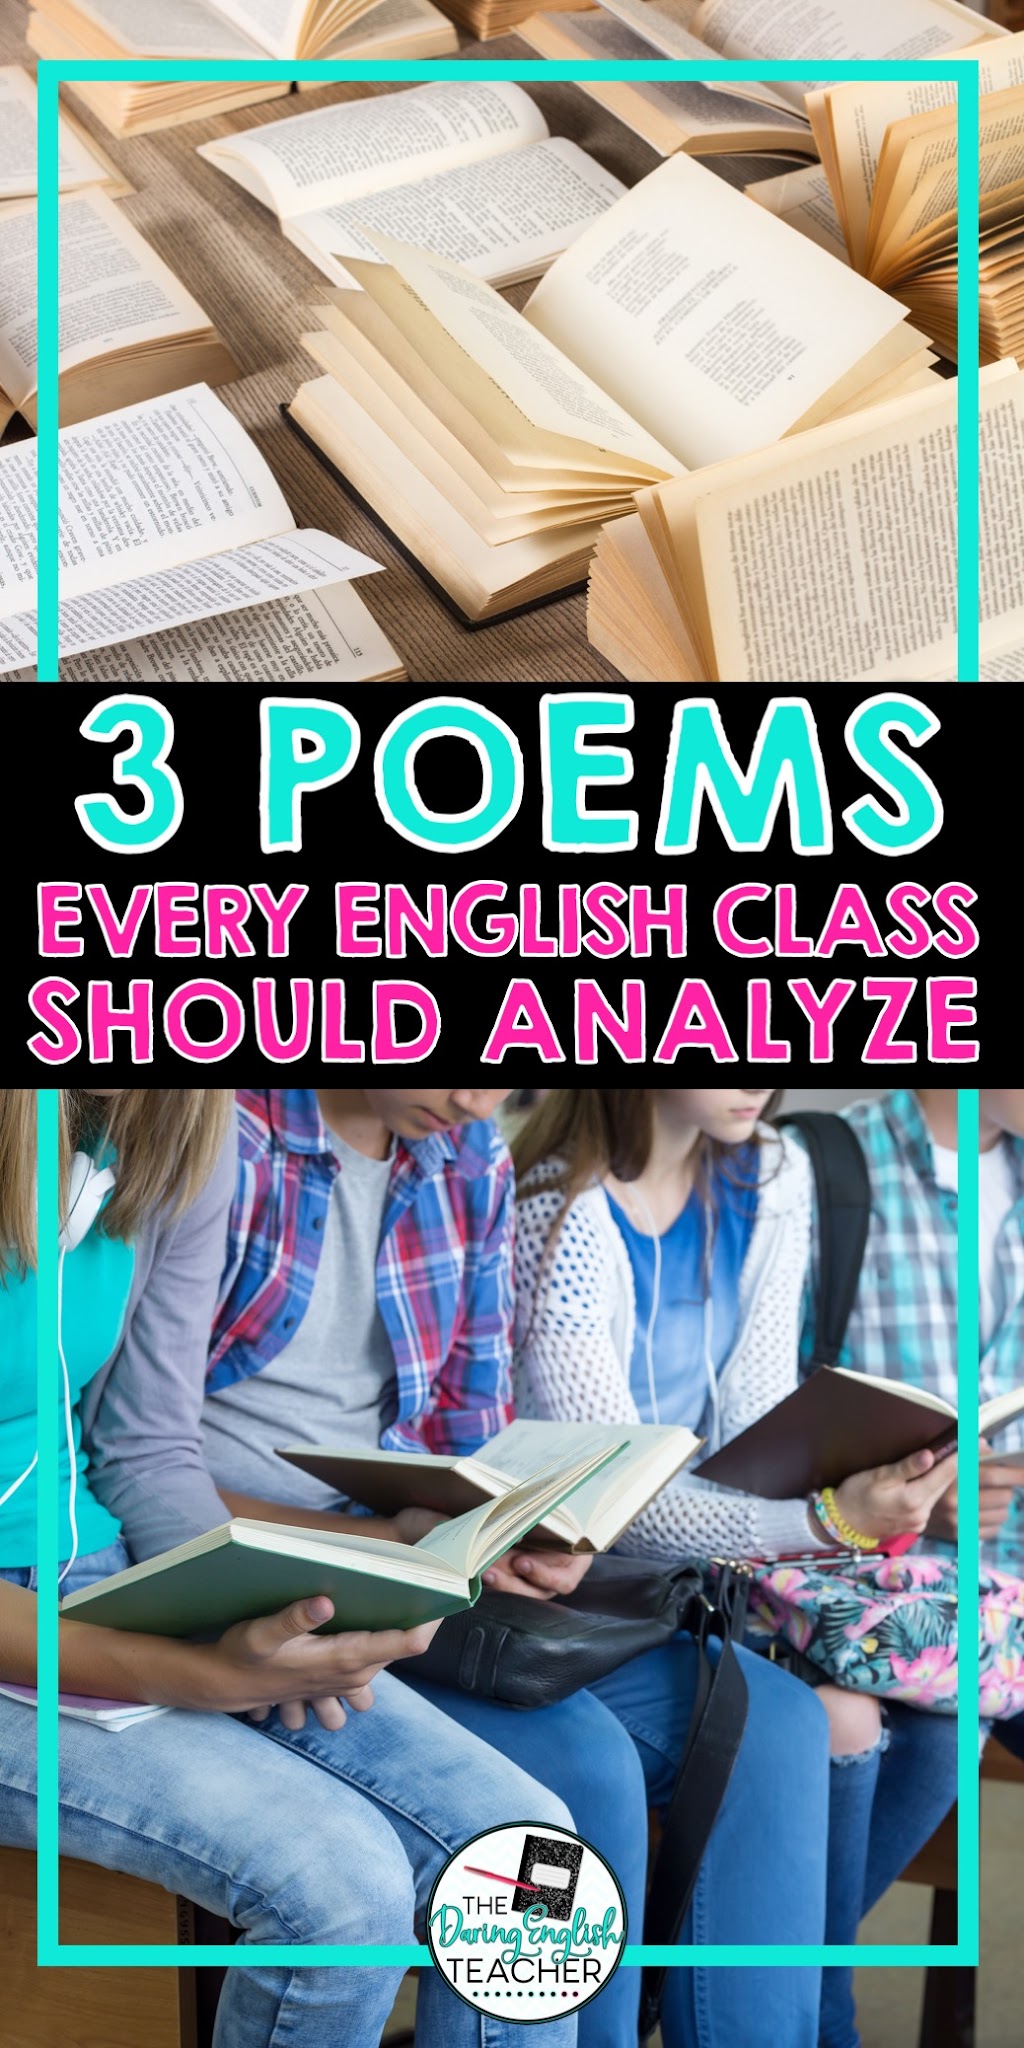 3 Poems Every English Class Should Analyze